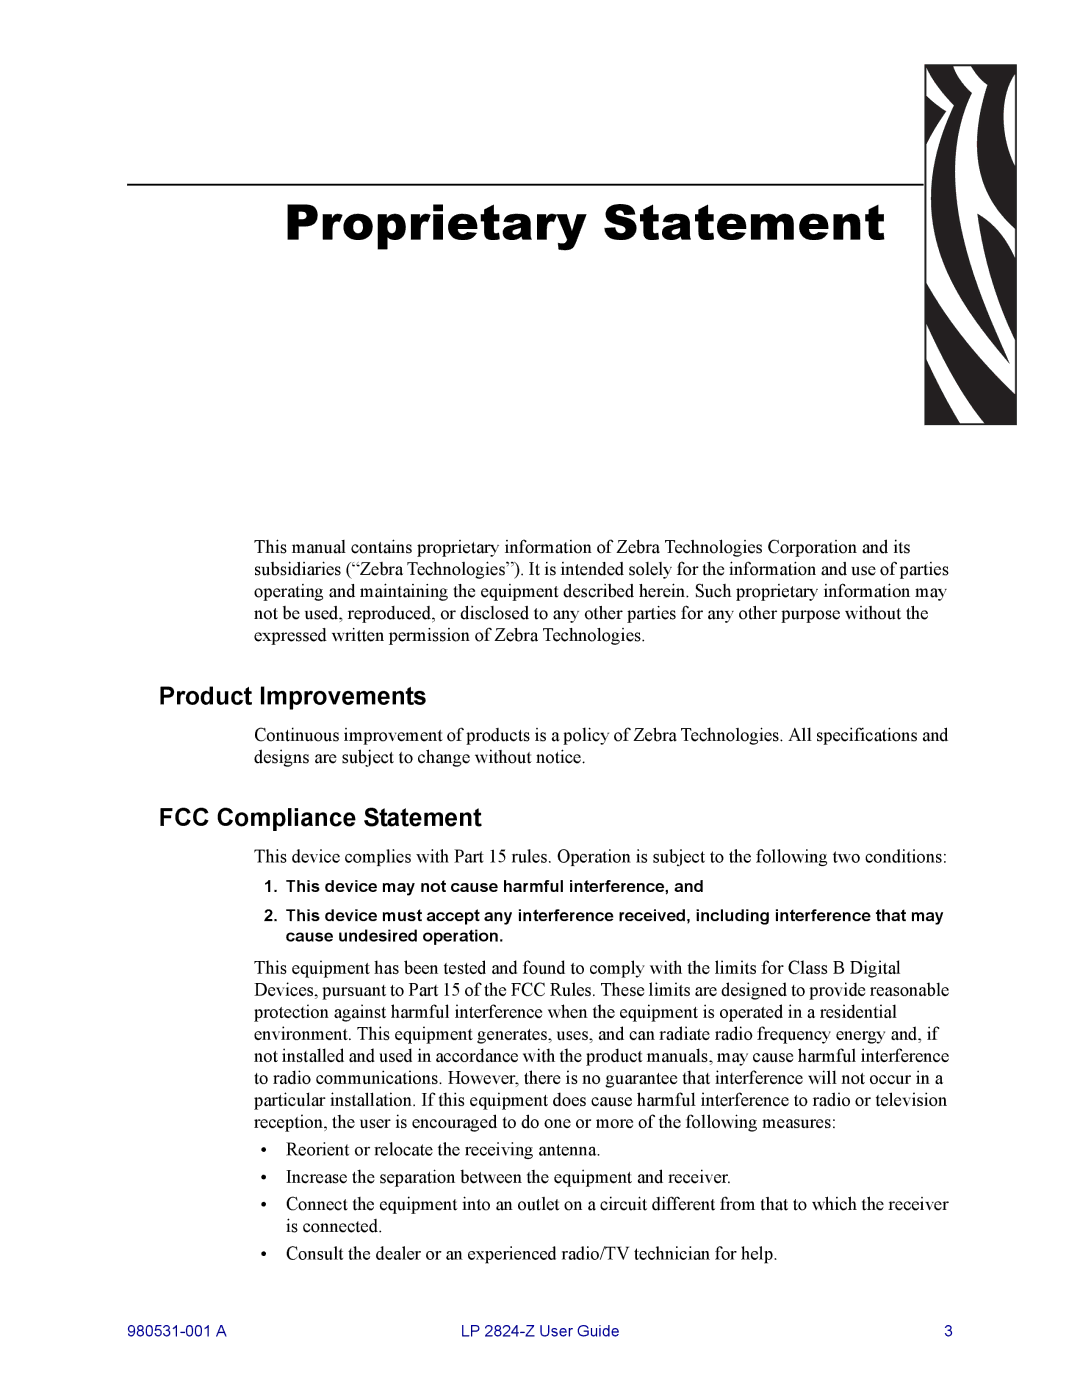 Zebra Technologies H 2824-Z user manual Proprietary Statement, Product Improvements, FCC Compliance Statement 